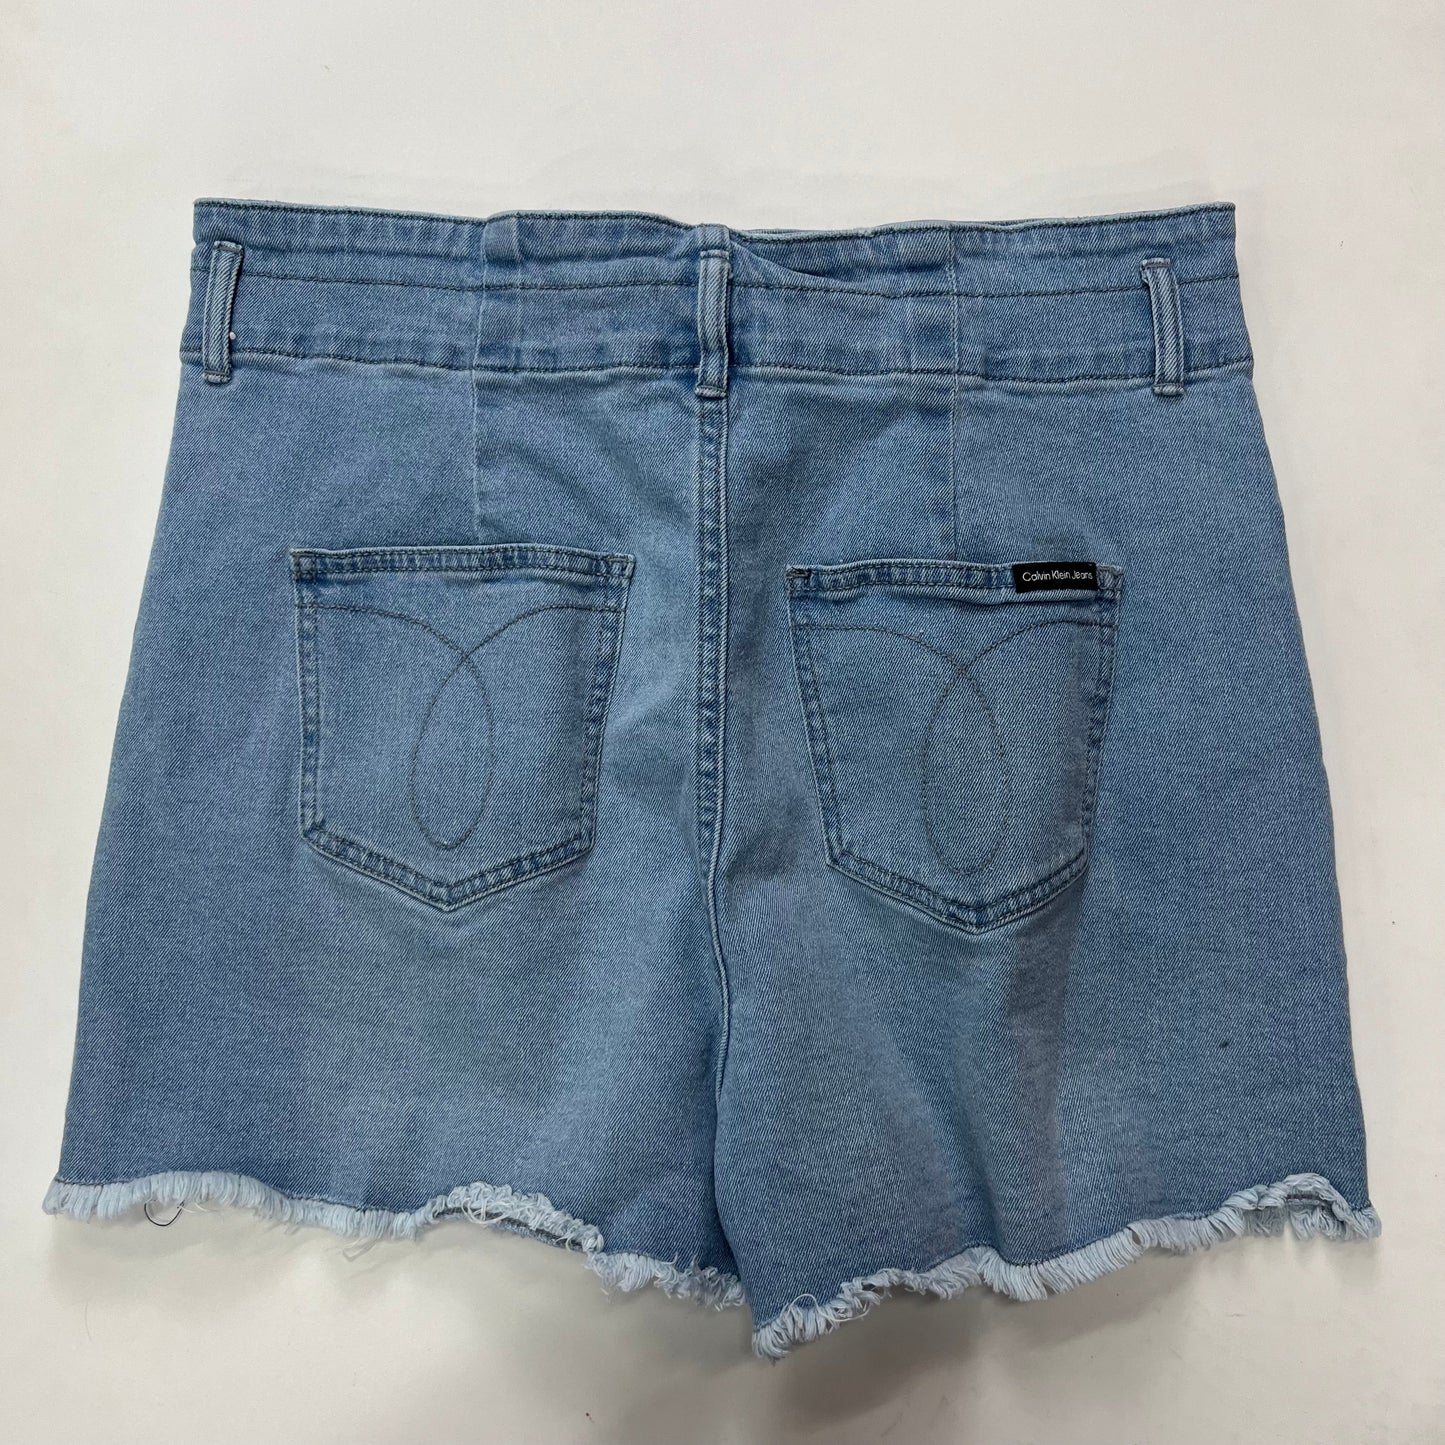 Shorts By Calvin Klein  Size: 14